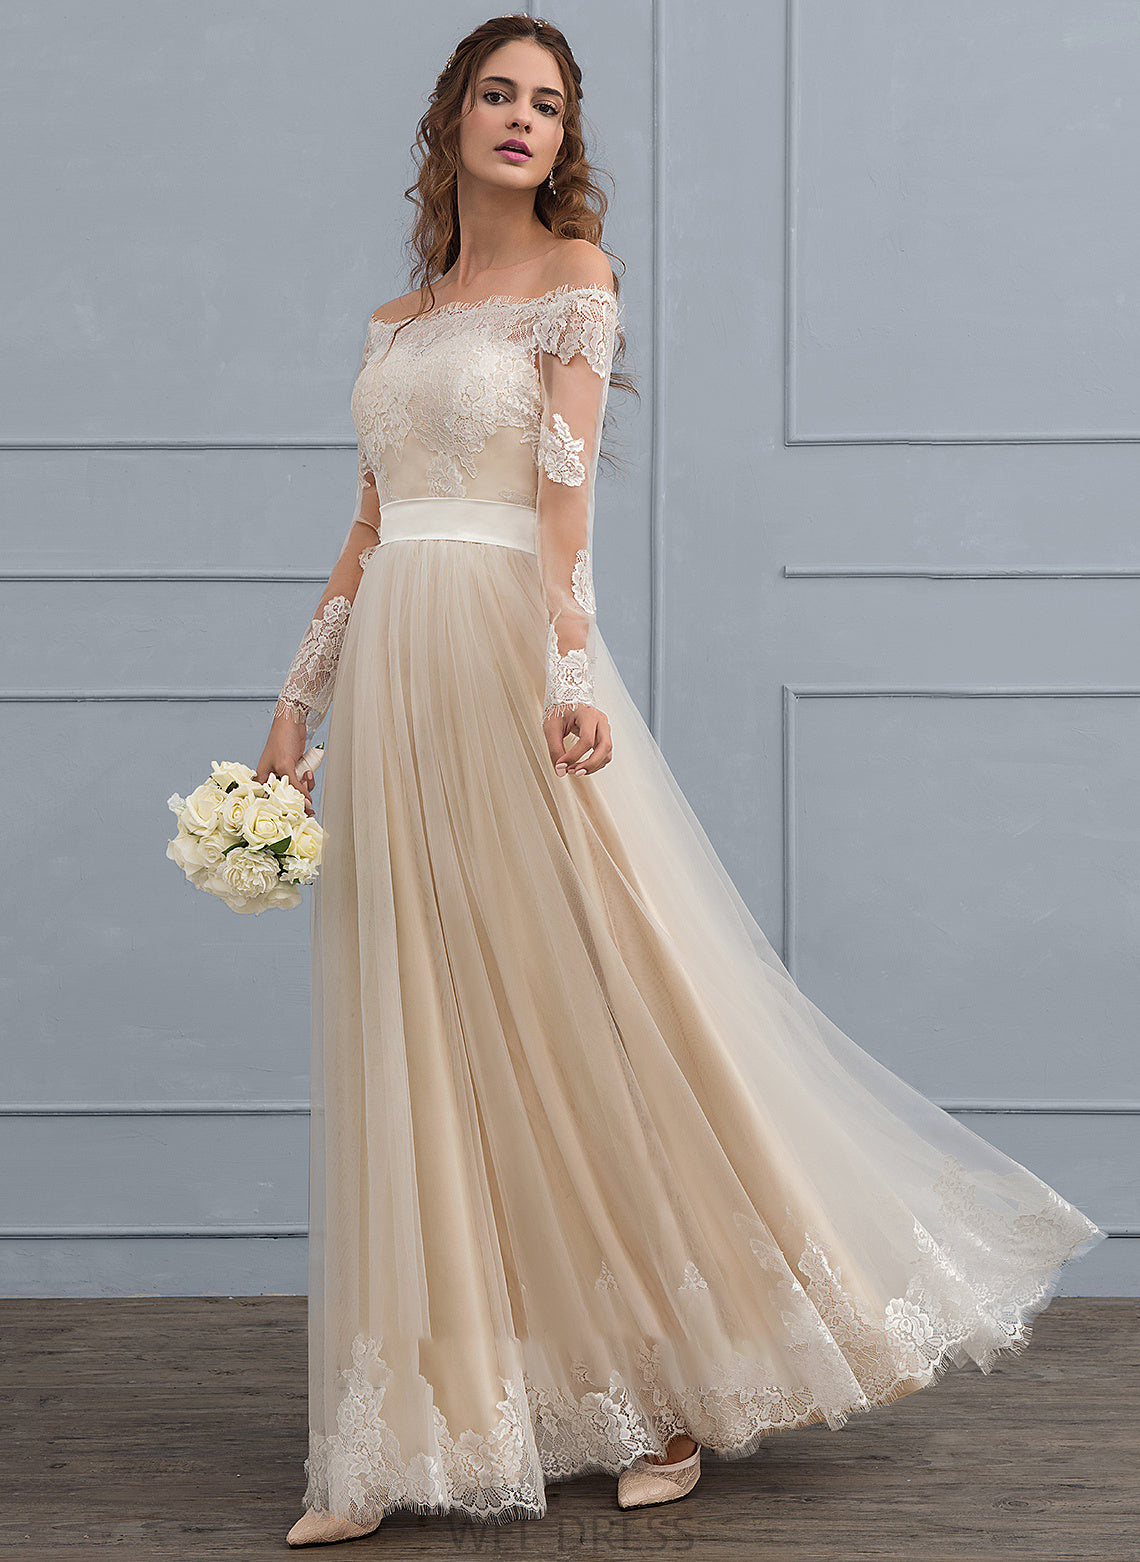 Lace Tulle A-Line Dress Wedding Dresses Floor-Length Wedding Kadence